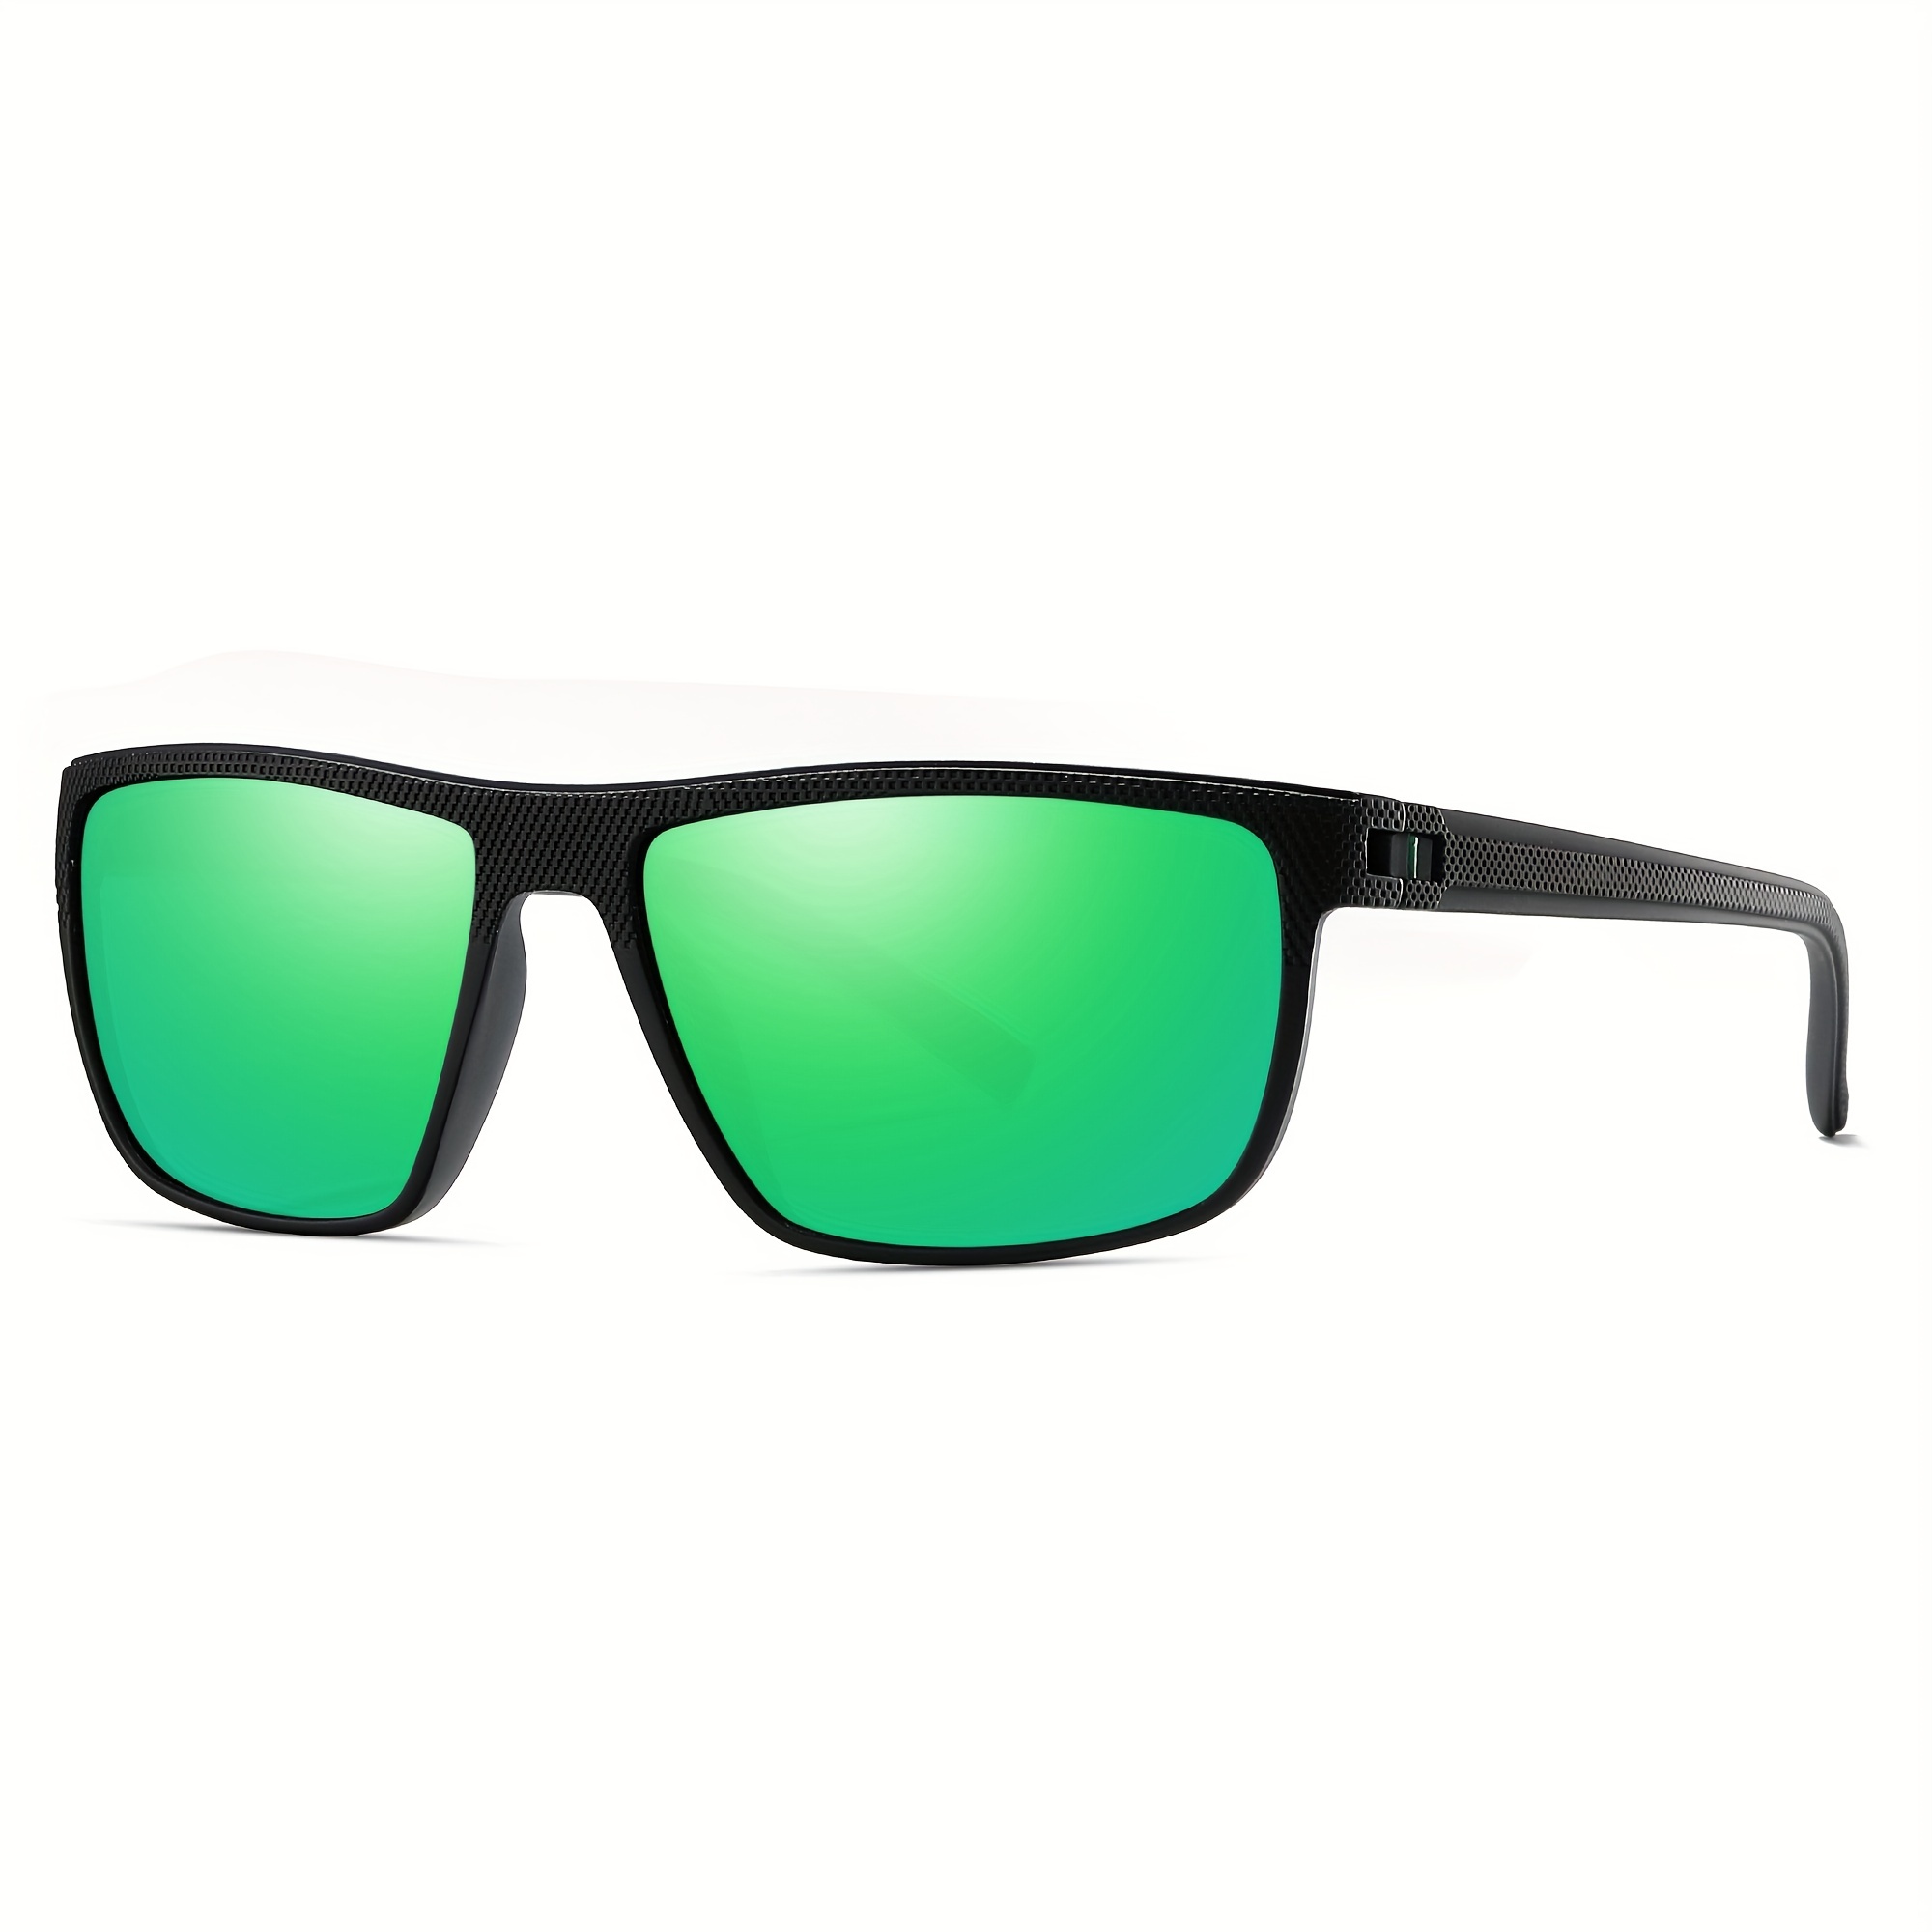 Pack de 6 gafas de sol deportivas polarizadas para hombre